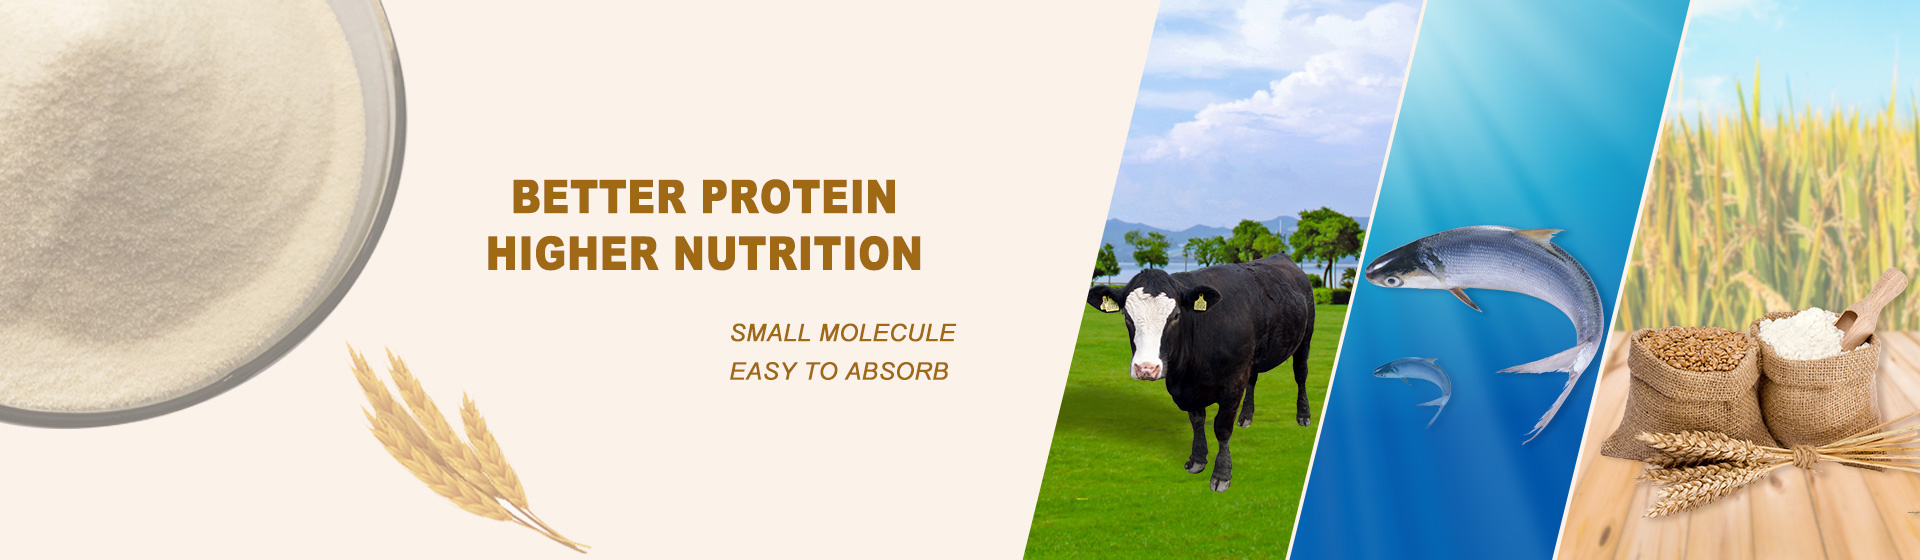 better protein higher nutrition